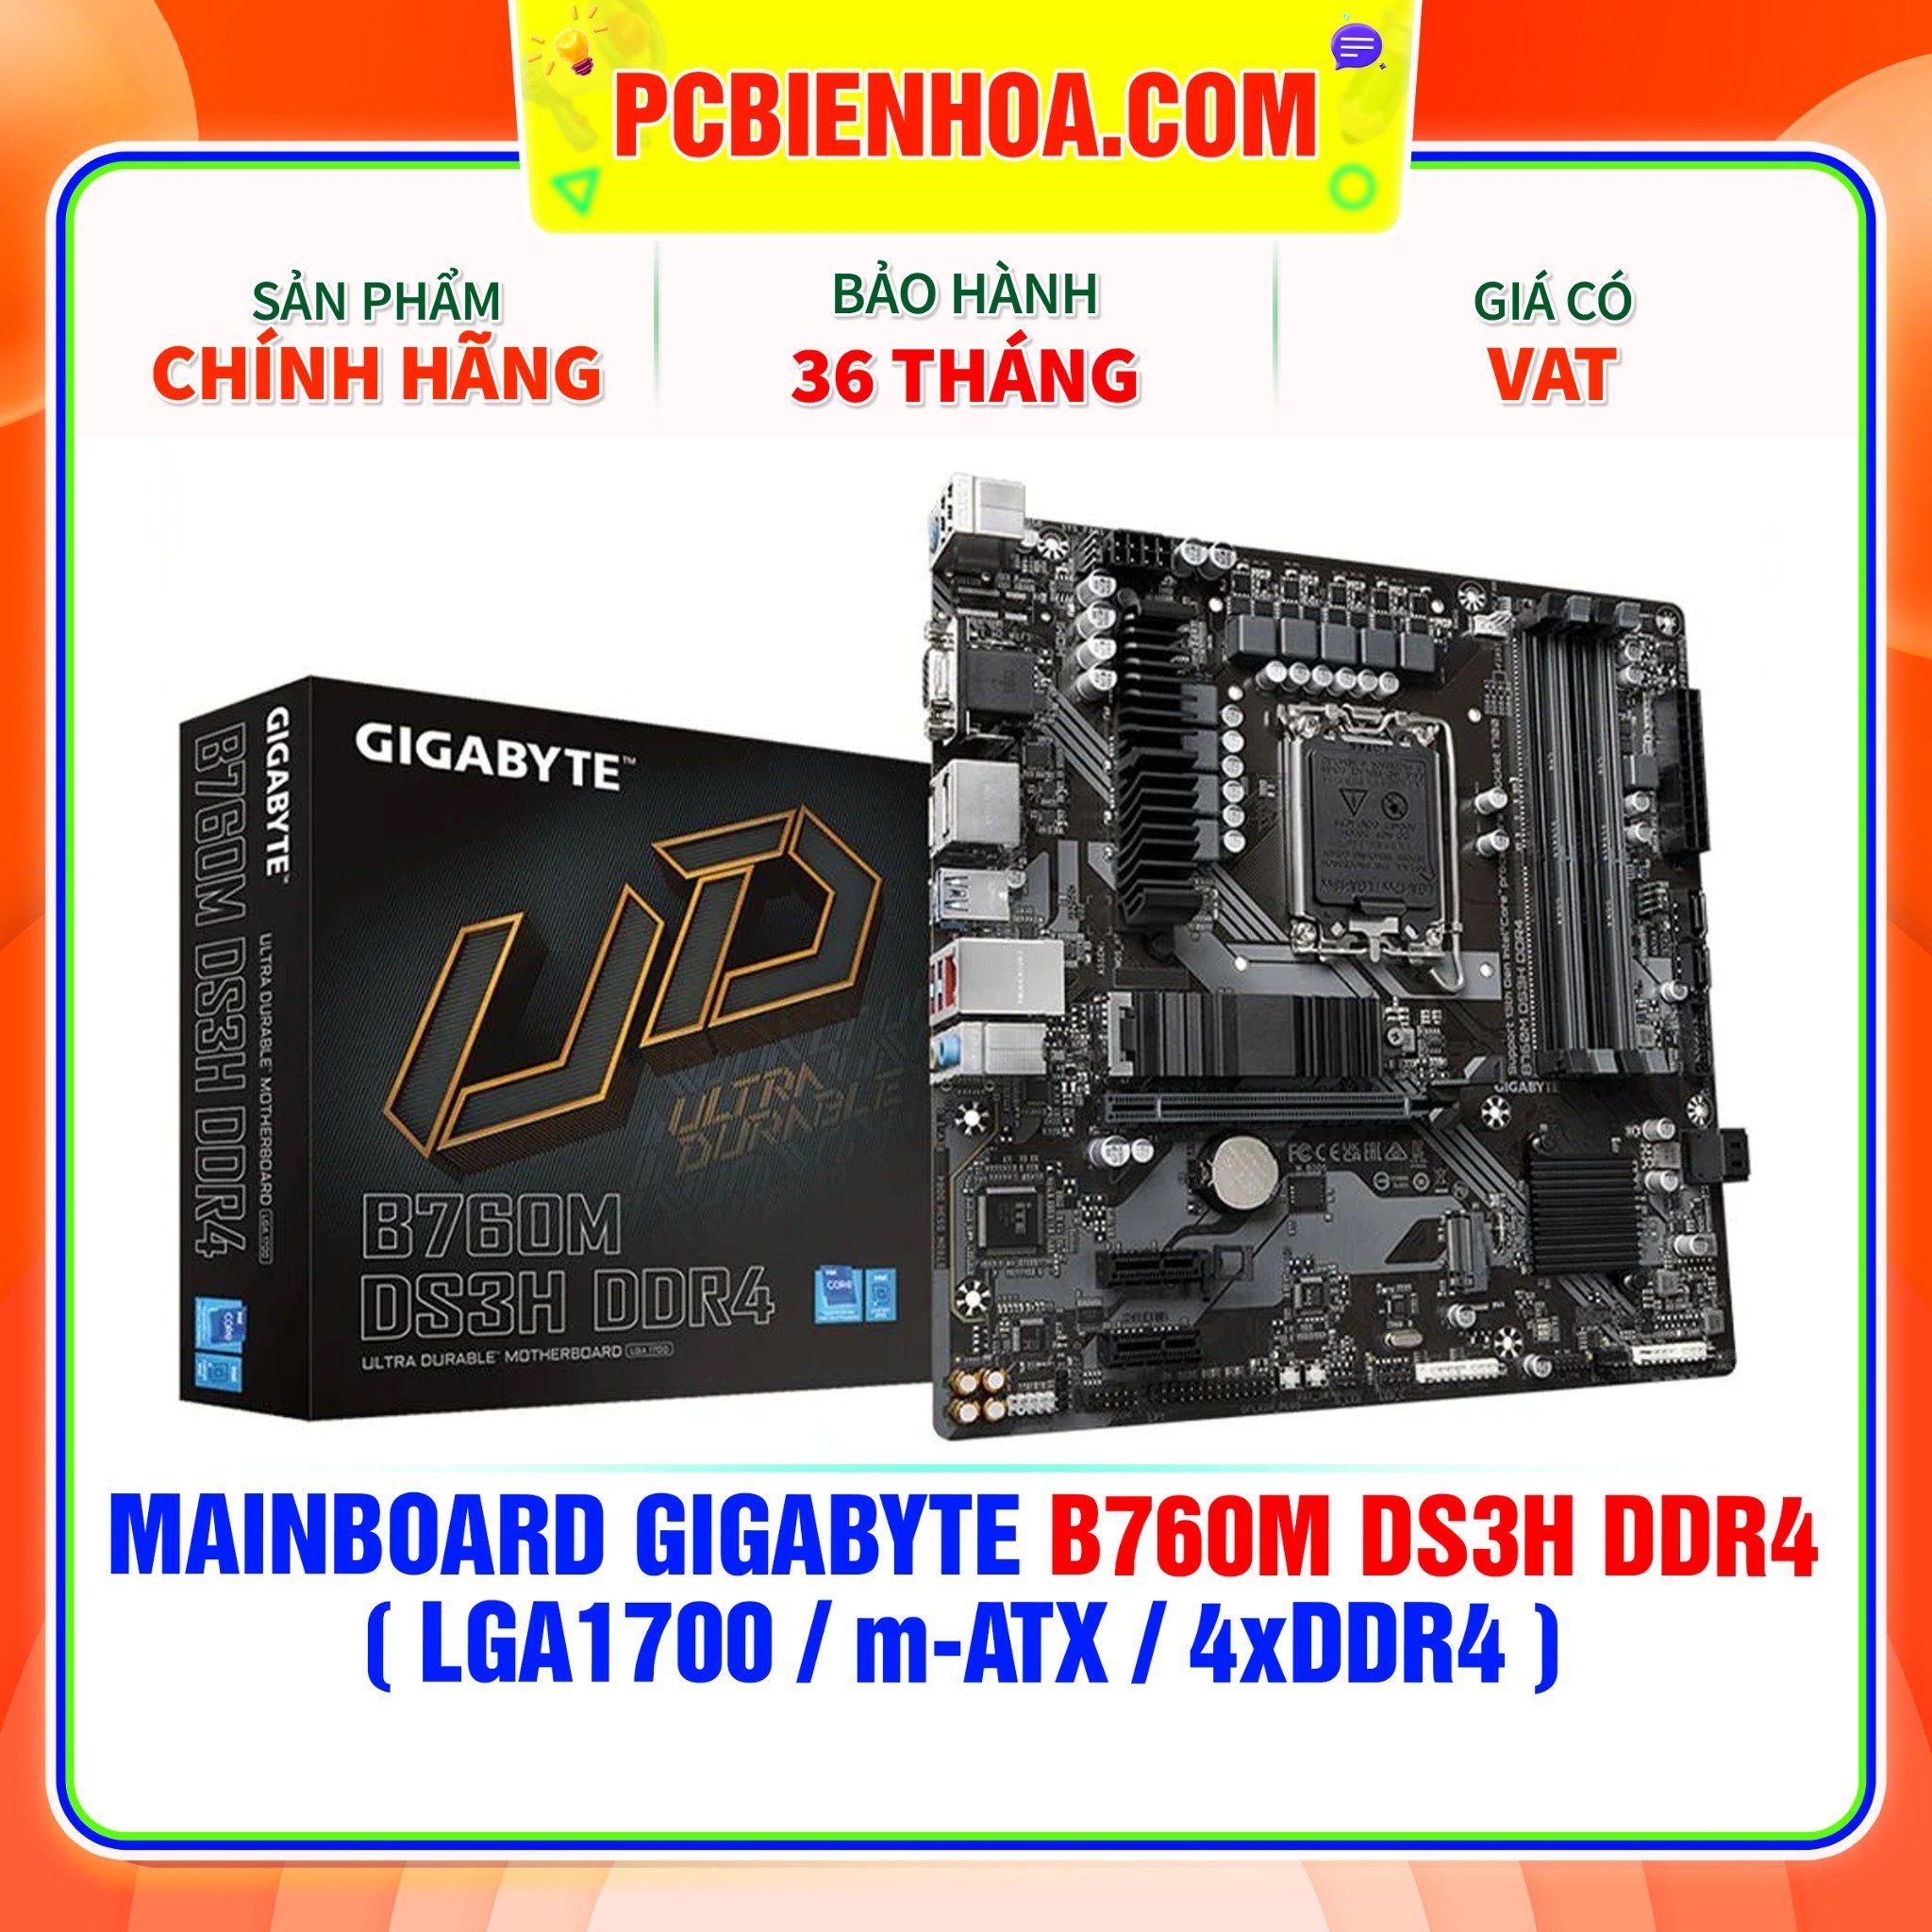  MAINBOARD GIGABYTE B760M DS3H DDR4 ( LGA1700 / m-ATX / 4xDDR4 ) 